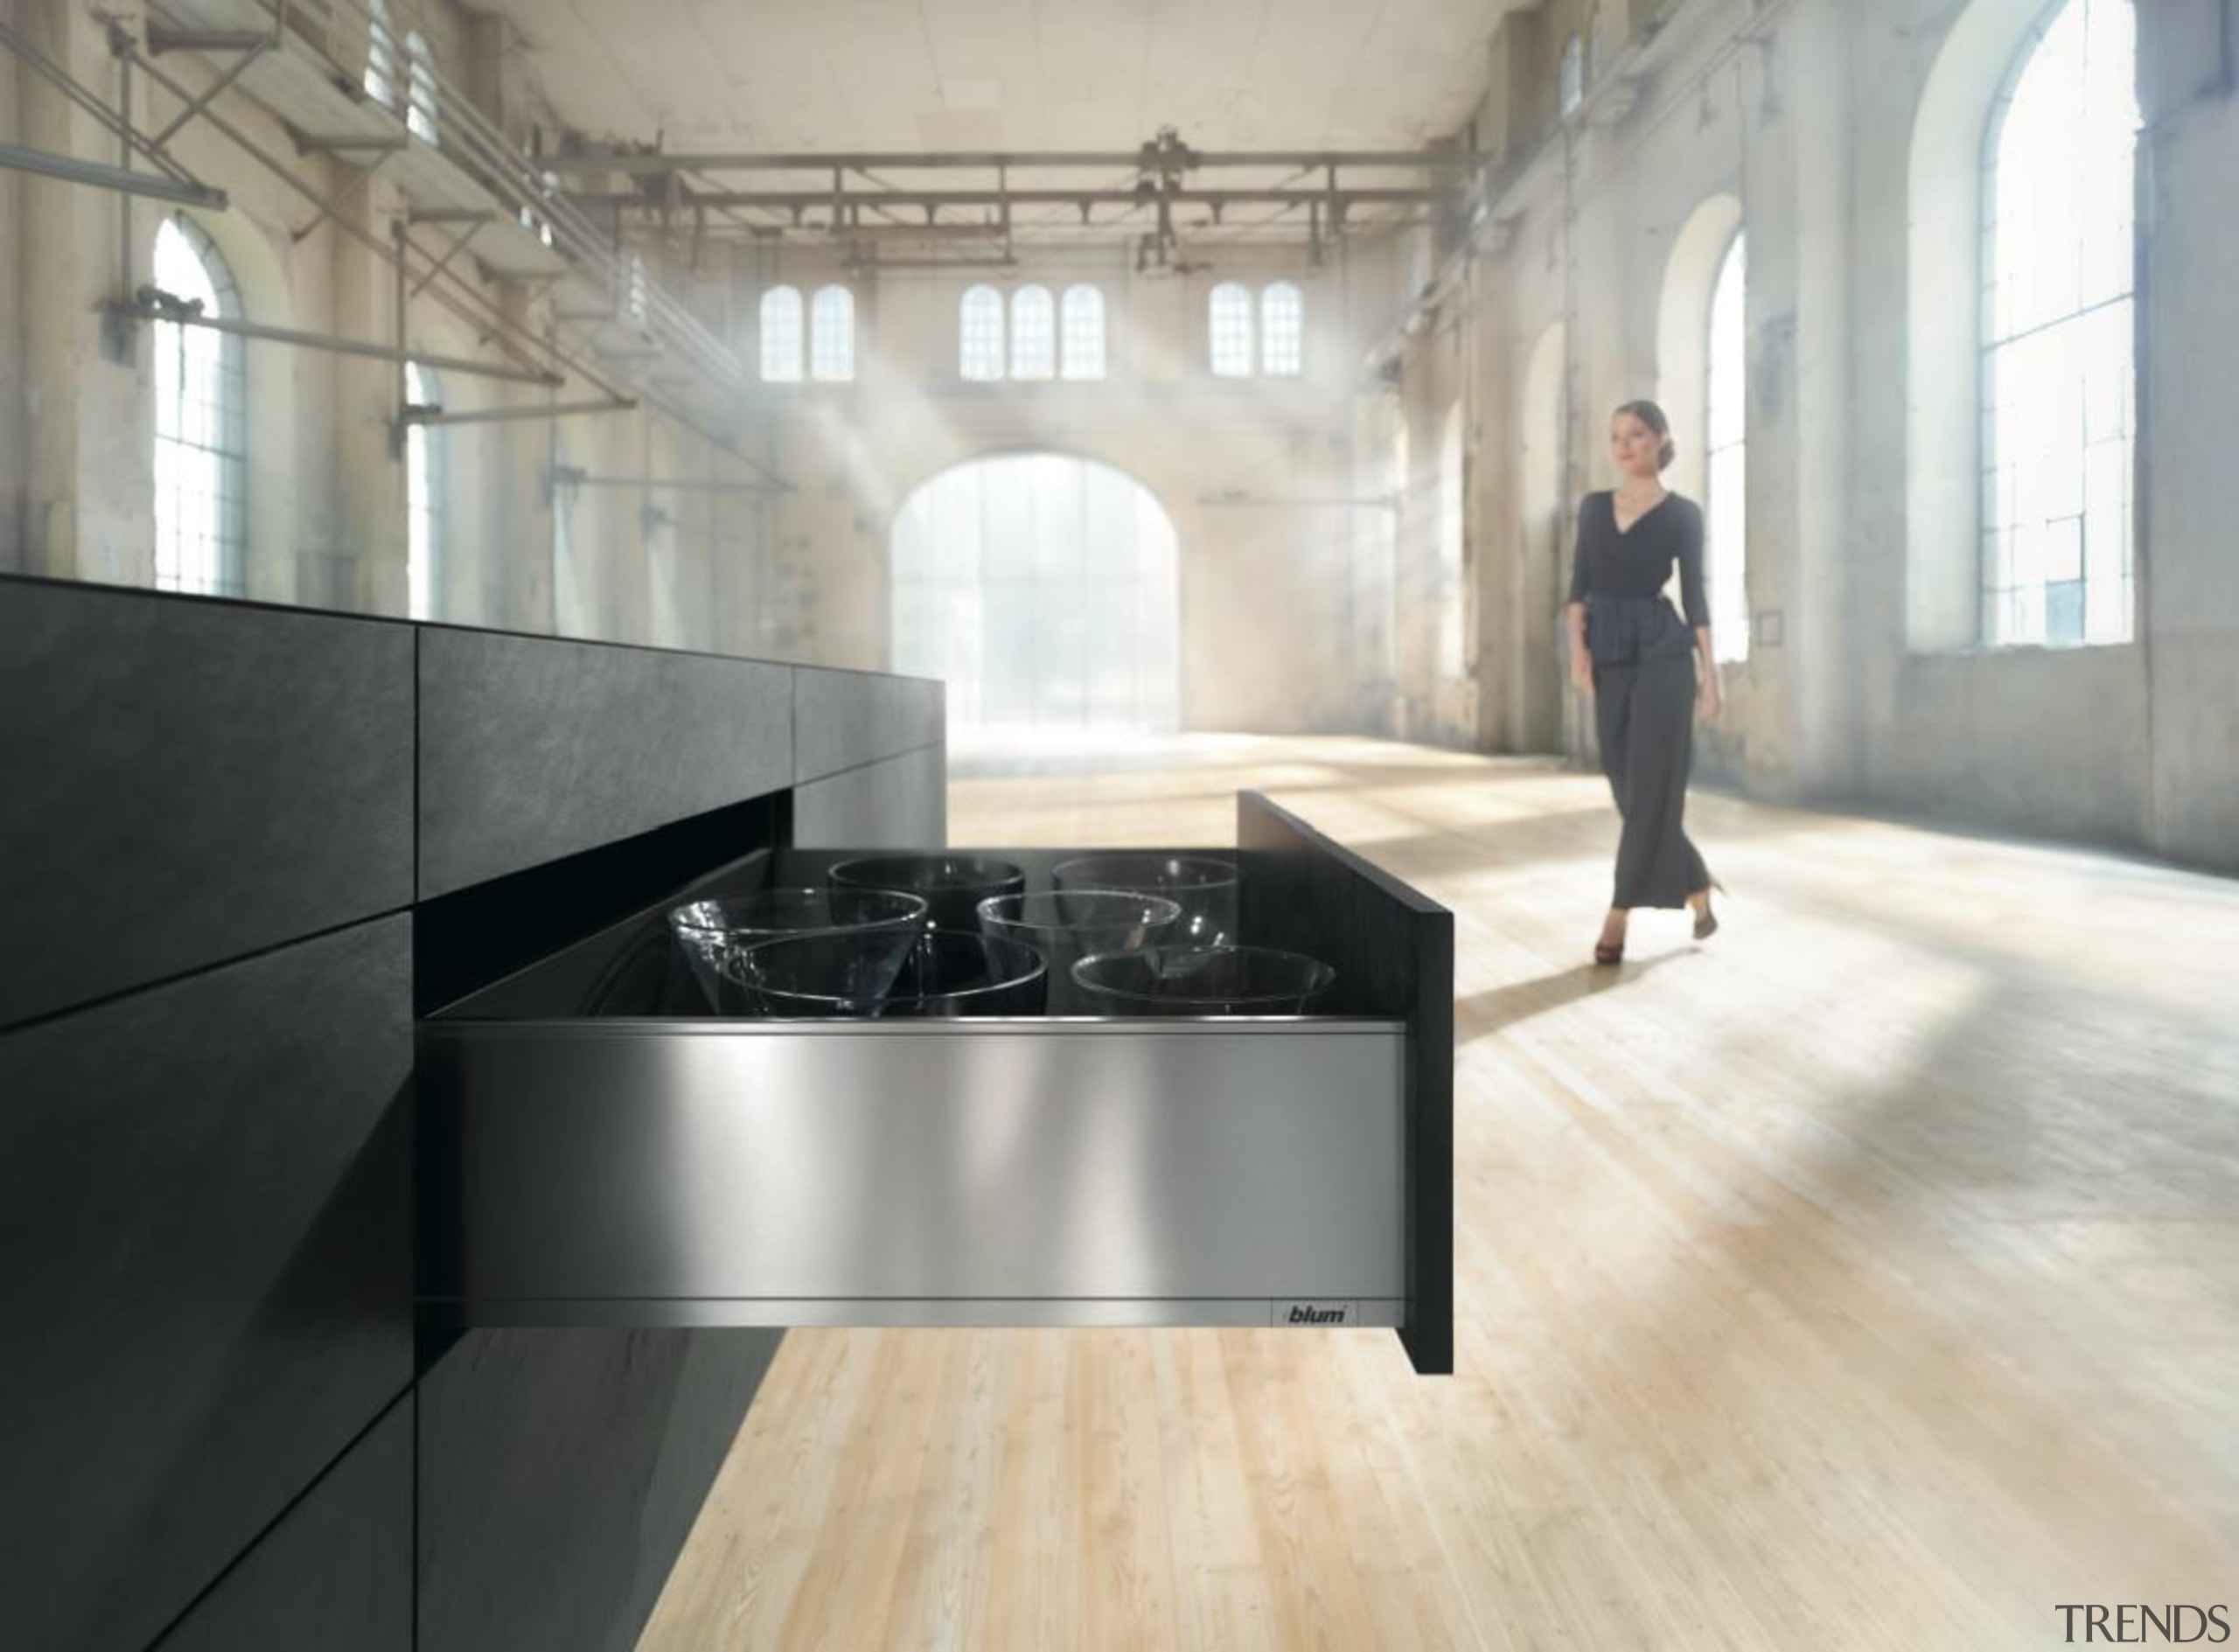 The new Legrabox drawer system from Blum boasts floor, flooring, furniture, interior design, table, white, gray